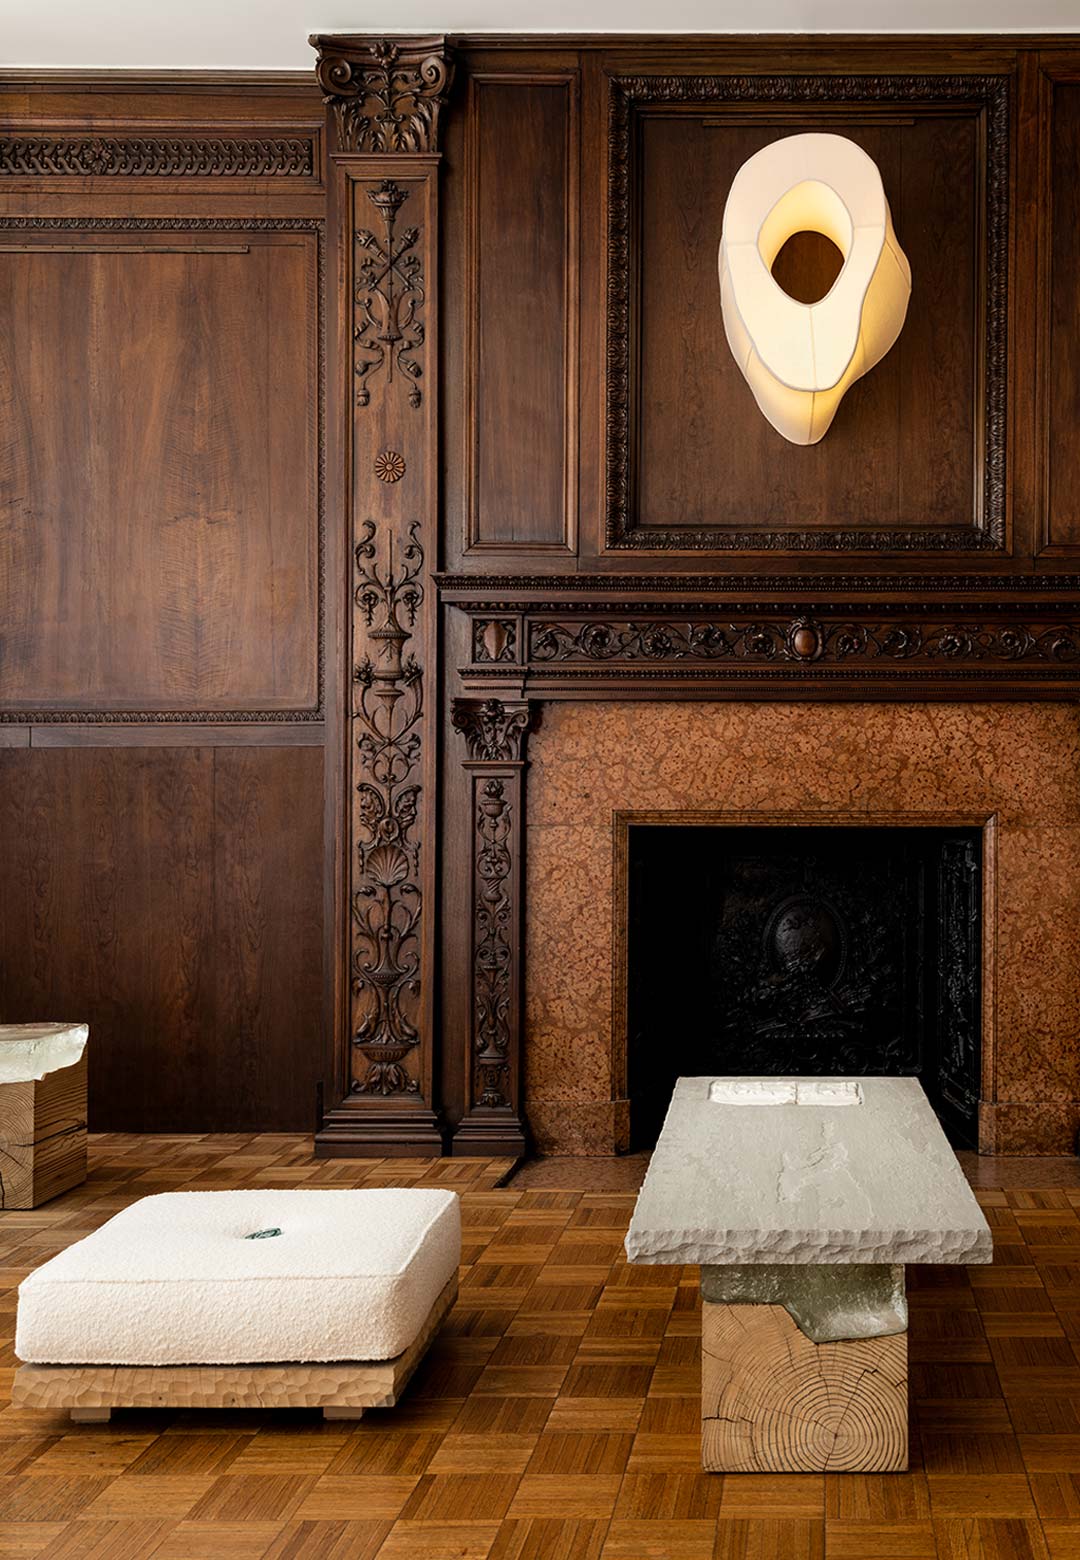 Emma Scully Gallery presents Rafael Prieto’s emotive connotations in furniture design